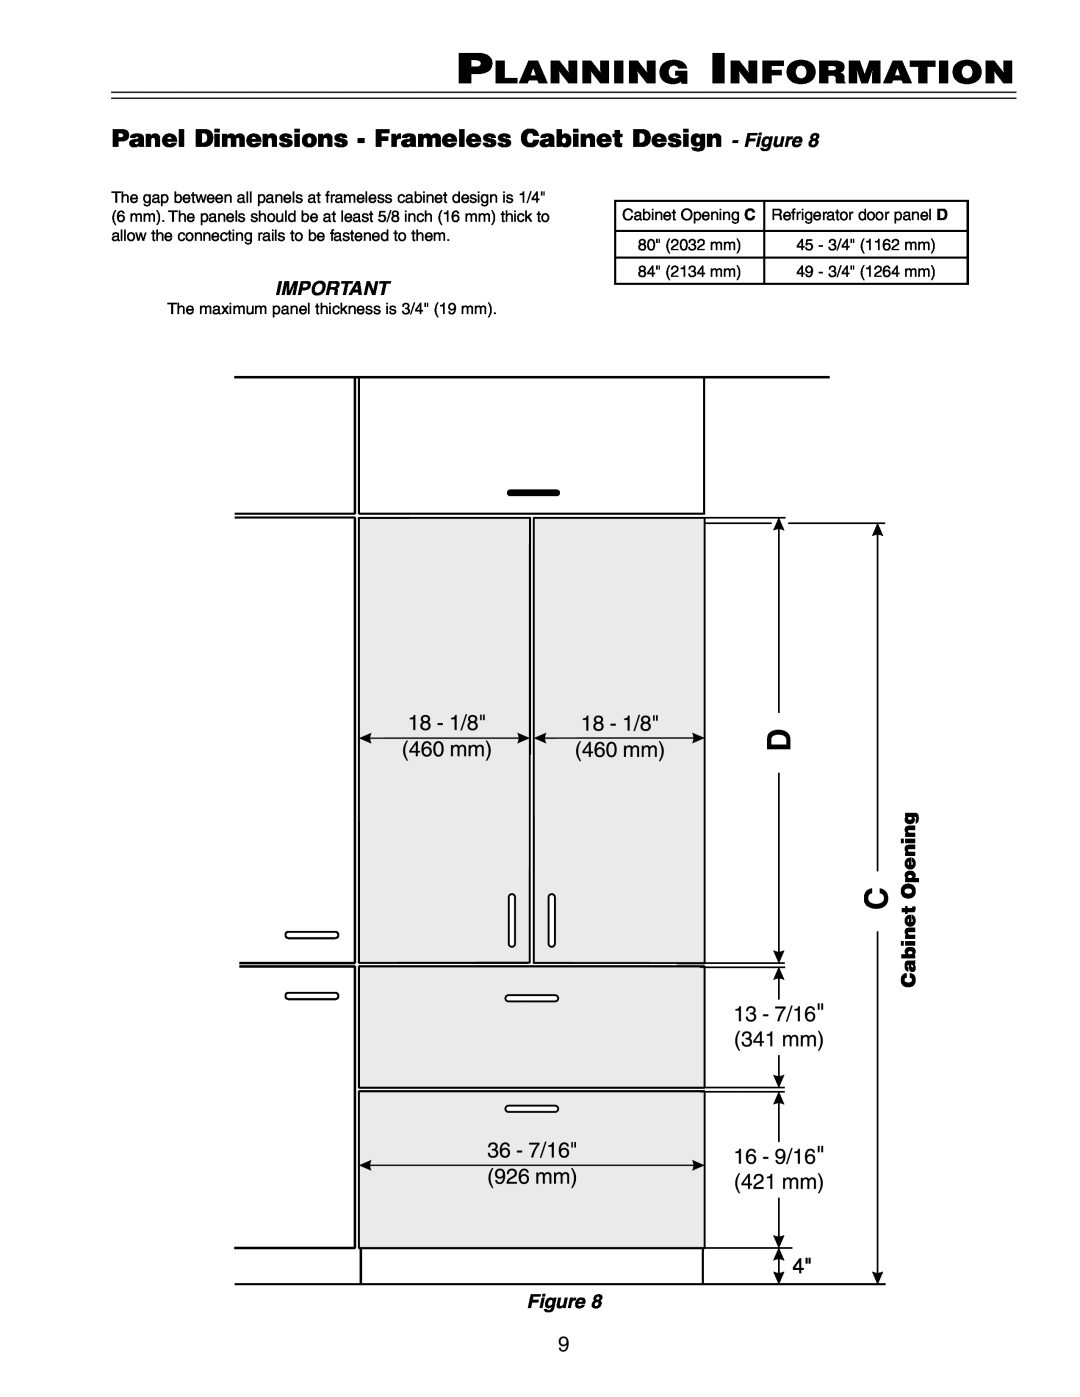 Liebherr HC 20 Panel Dimensions - Frameless Cabinet Design - Figure, Planning Information, Cabinet Opening, 80 2032 mm 